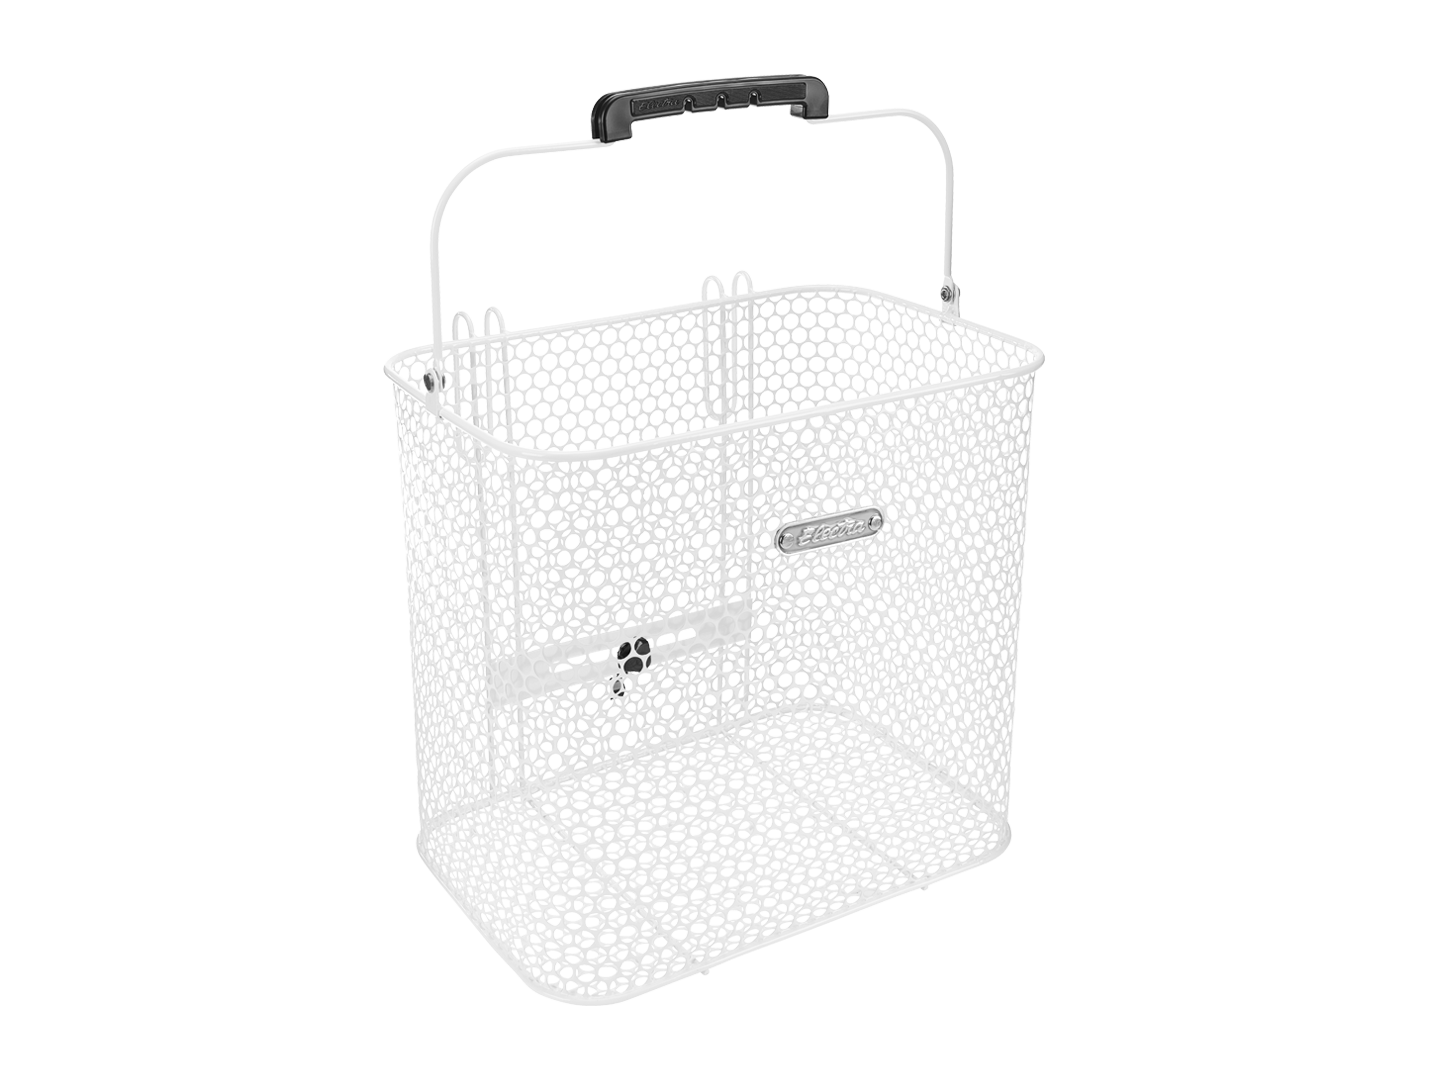 Basket Electra Honeycomb Pannier White Rear